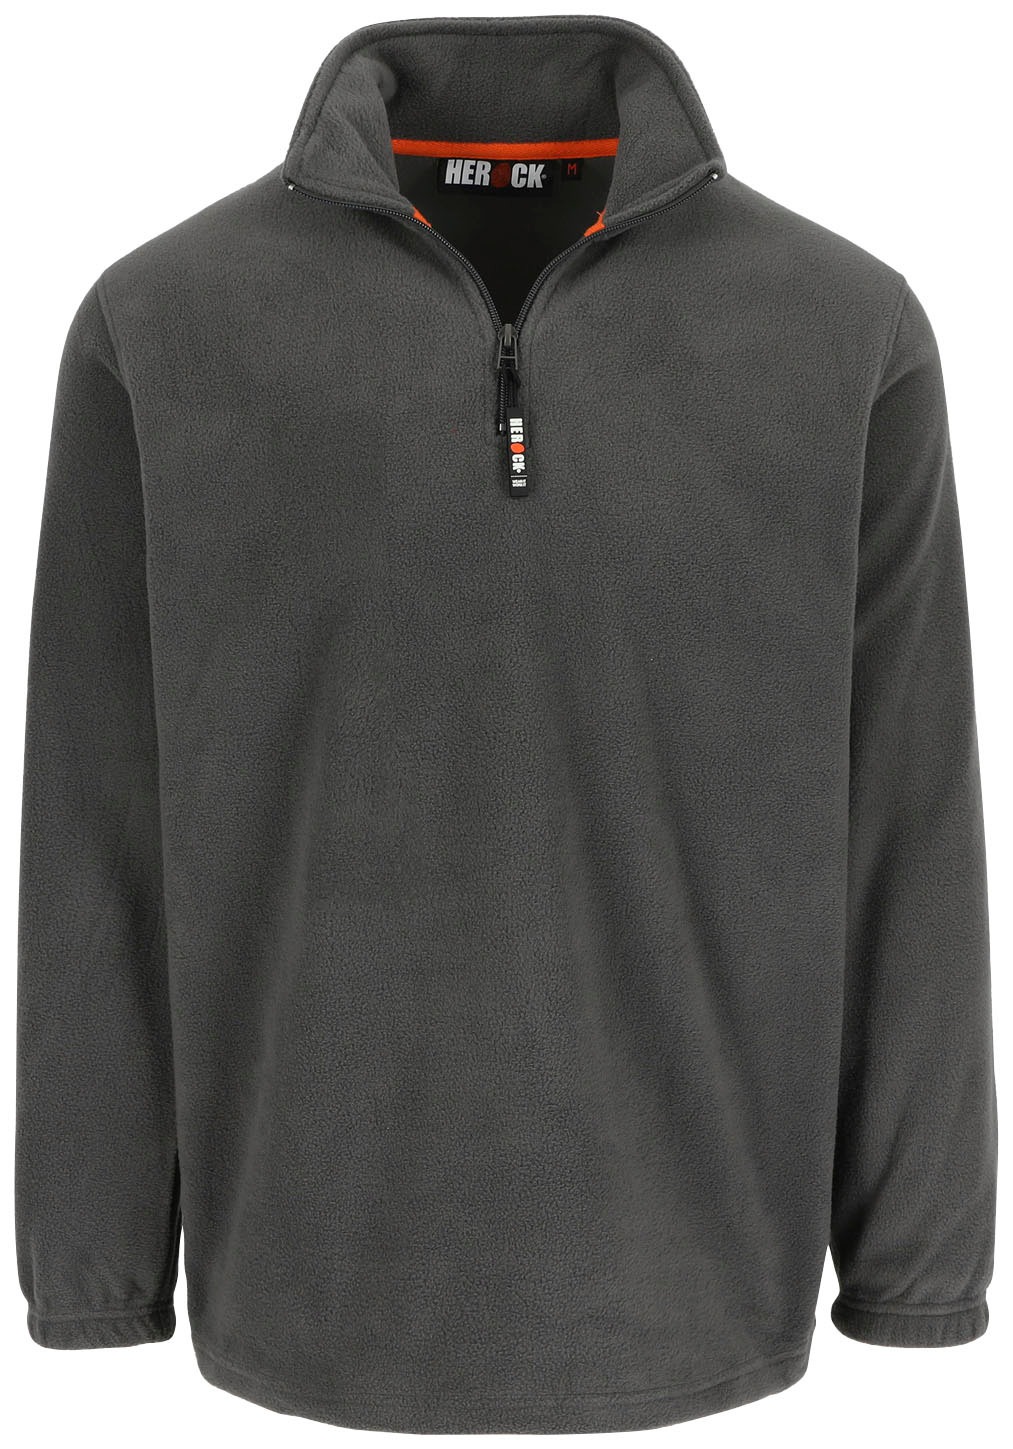 Strickfleece-Pullover kaufen günstig »Antalis Herock Fleece Sweater«